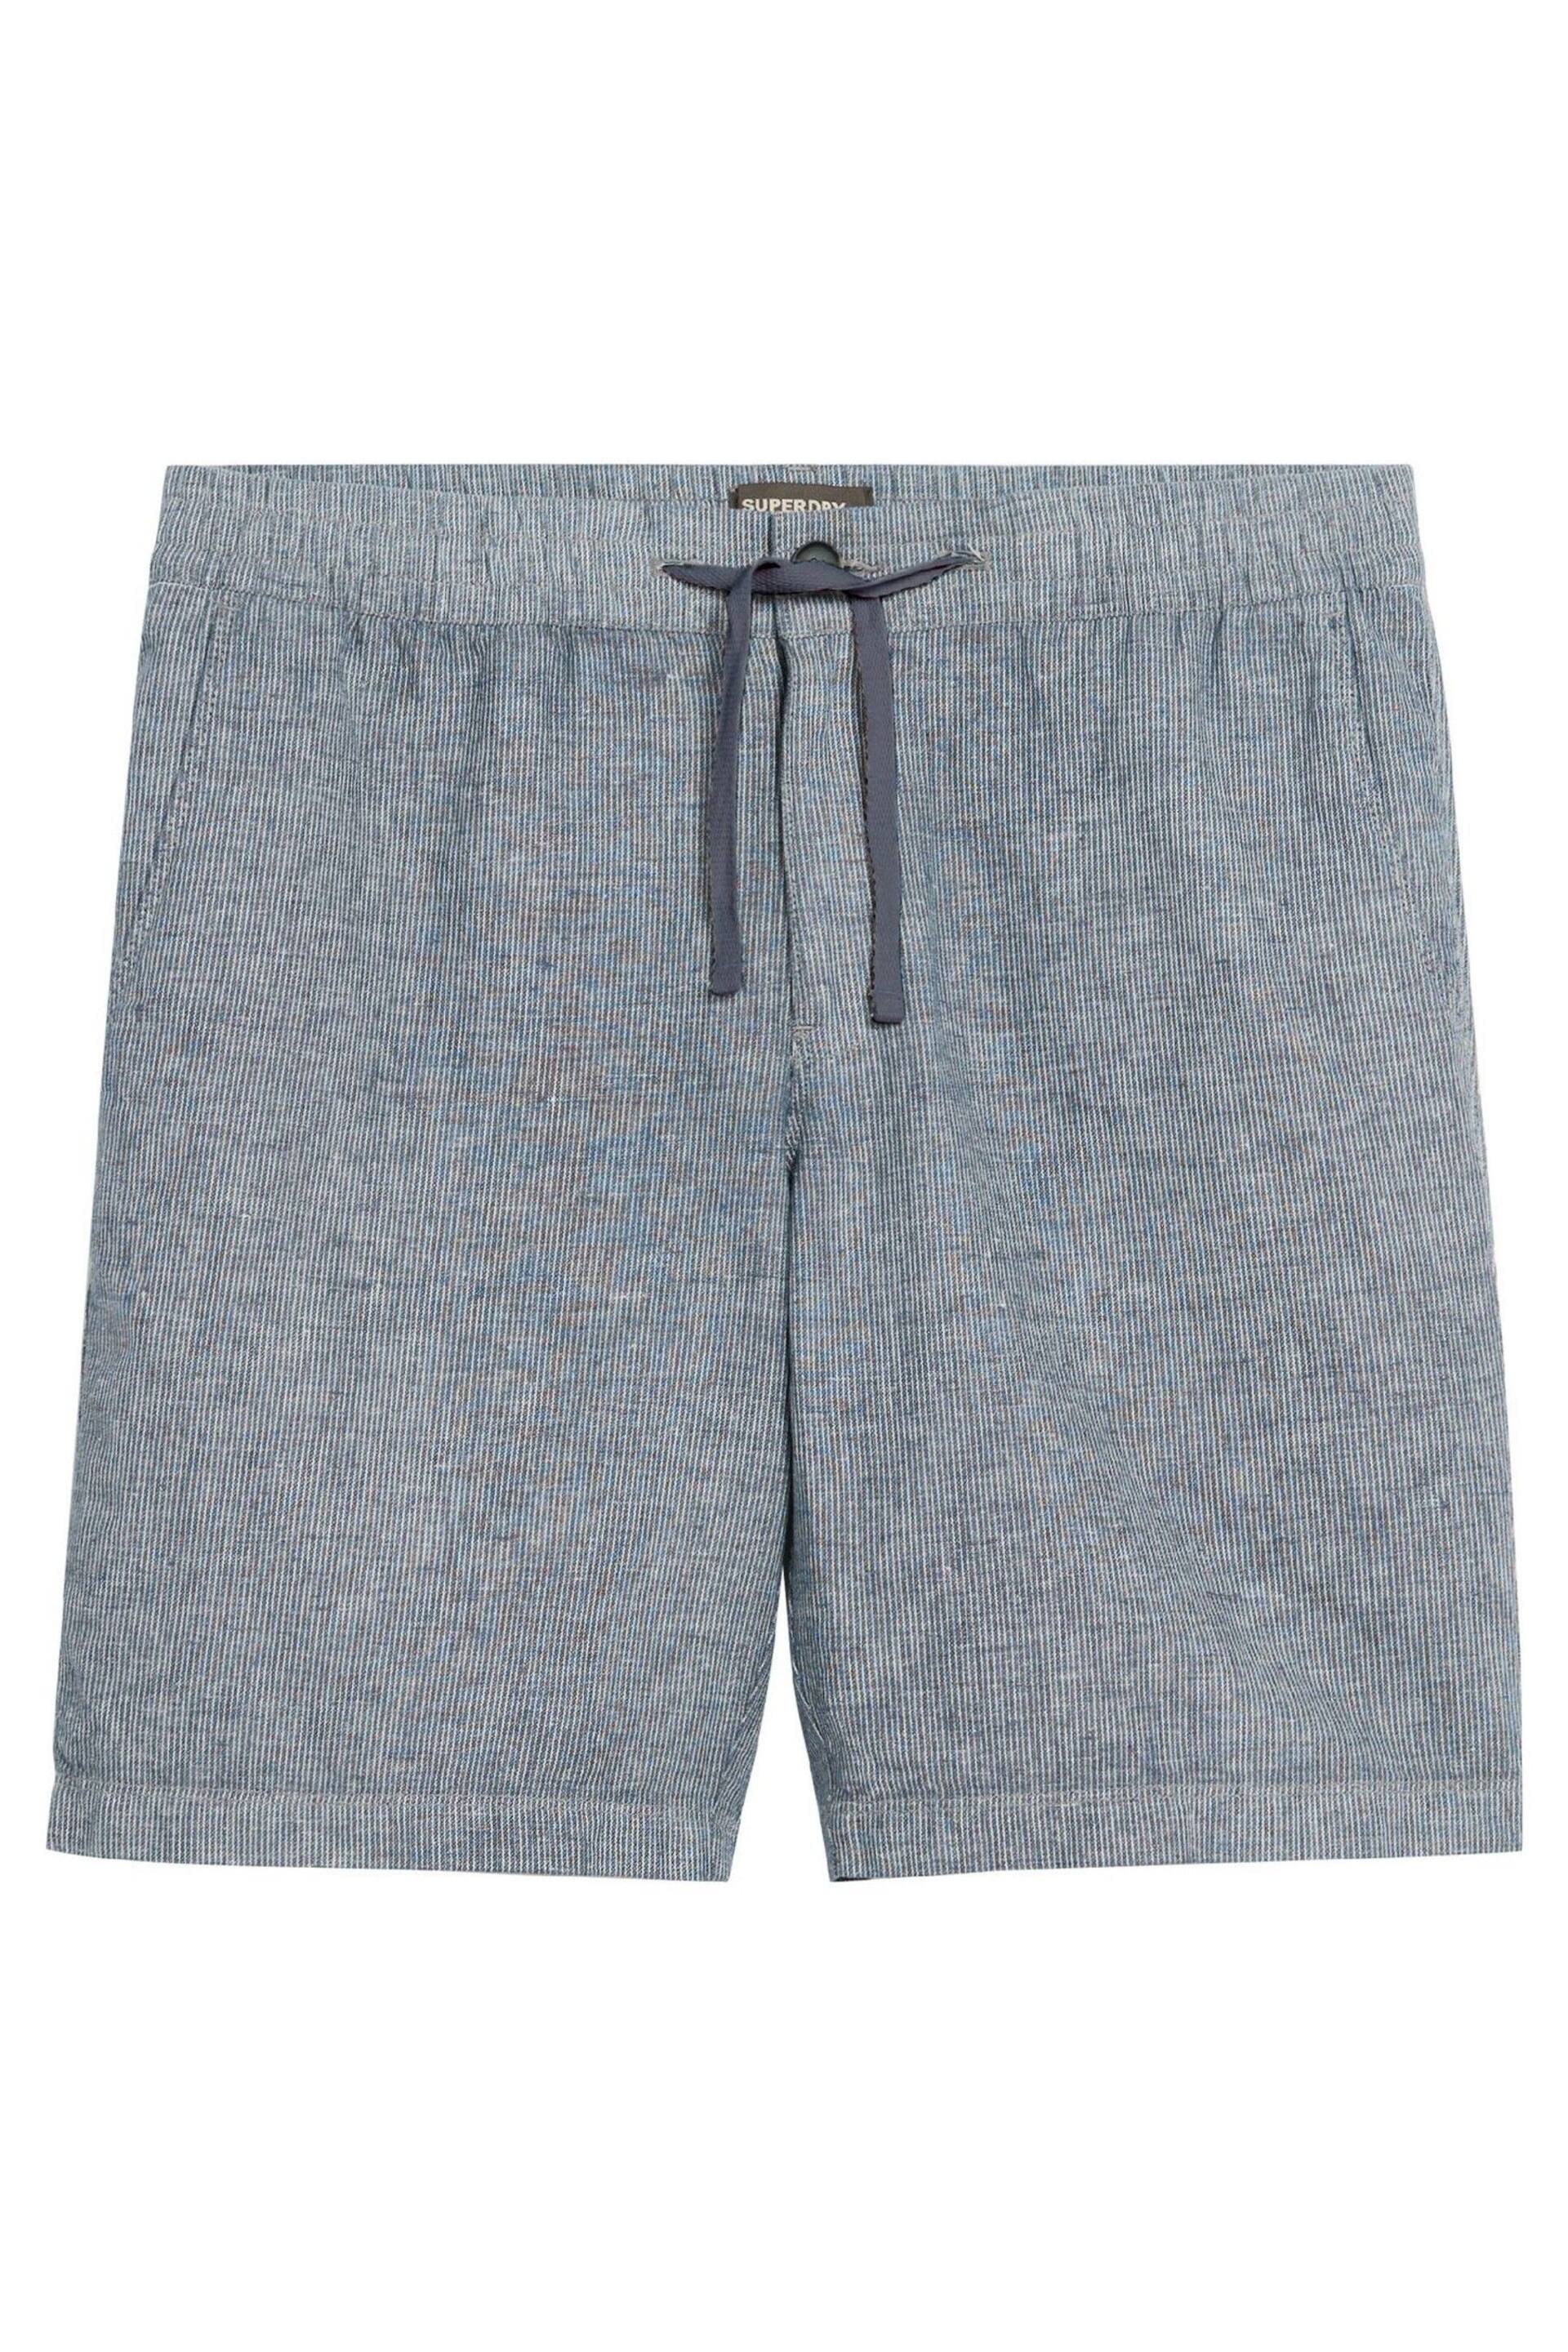 Superdry Blue Drawstring Linen Shorts - Image 7 of 7